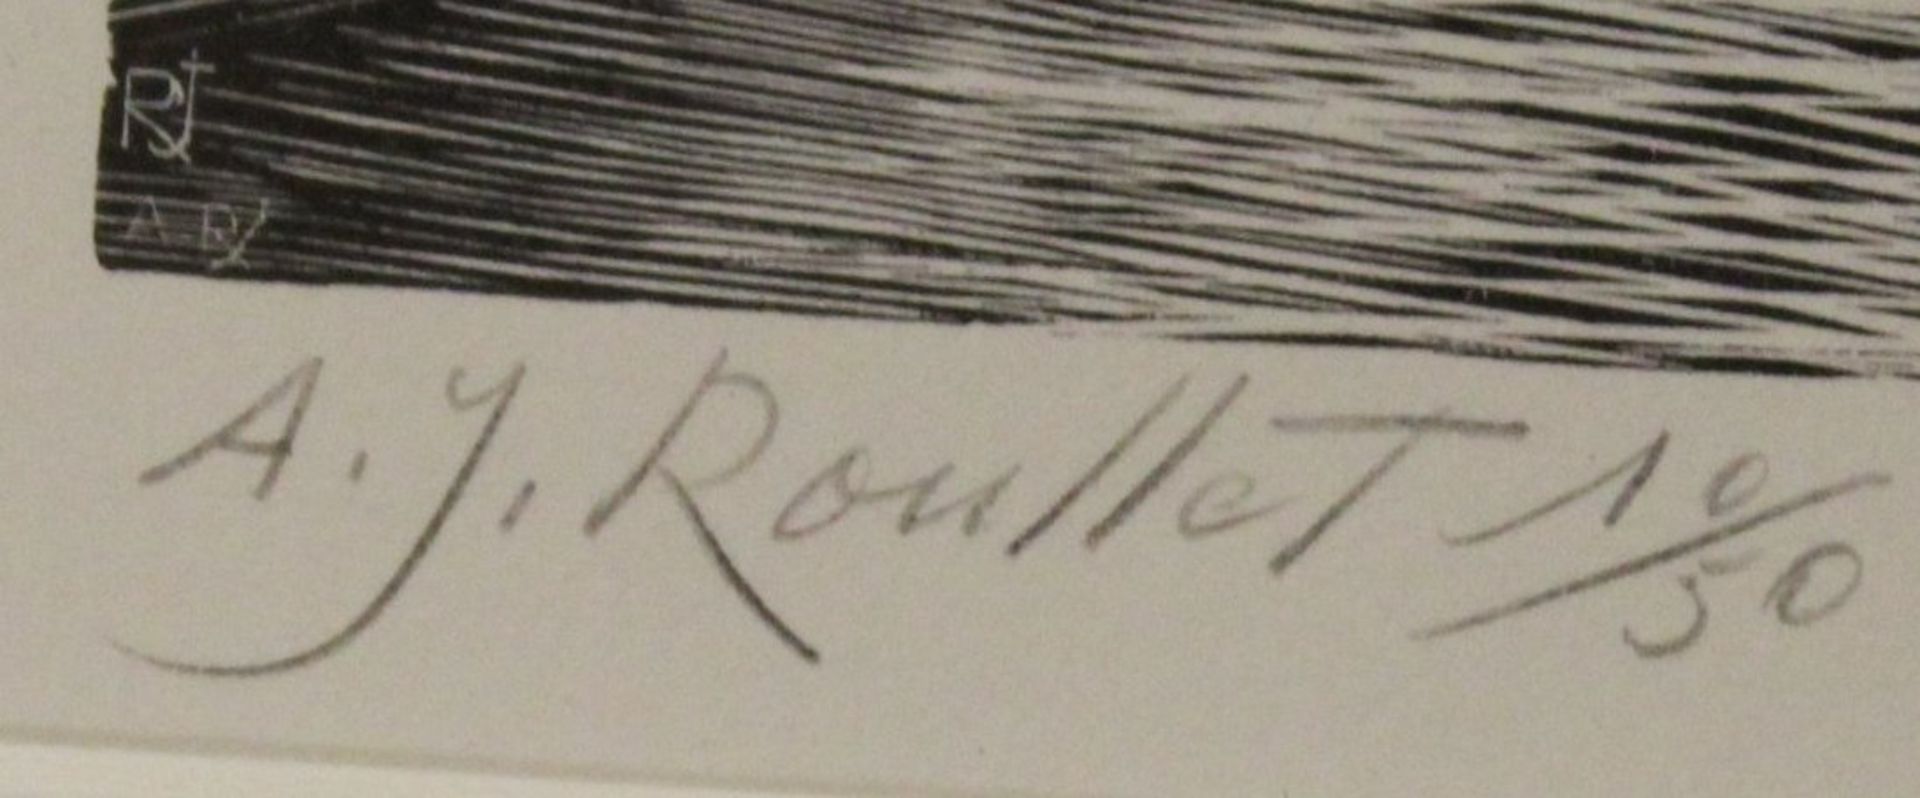 Jacques Armand ROULLET (1903-1995), Hafenansicht, Xylographie, franz. betitelt, gerahmt/Glas, RG 36 - Image 3 of 4